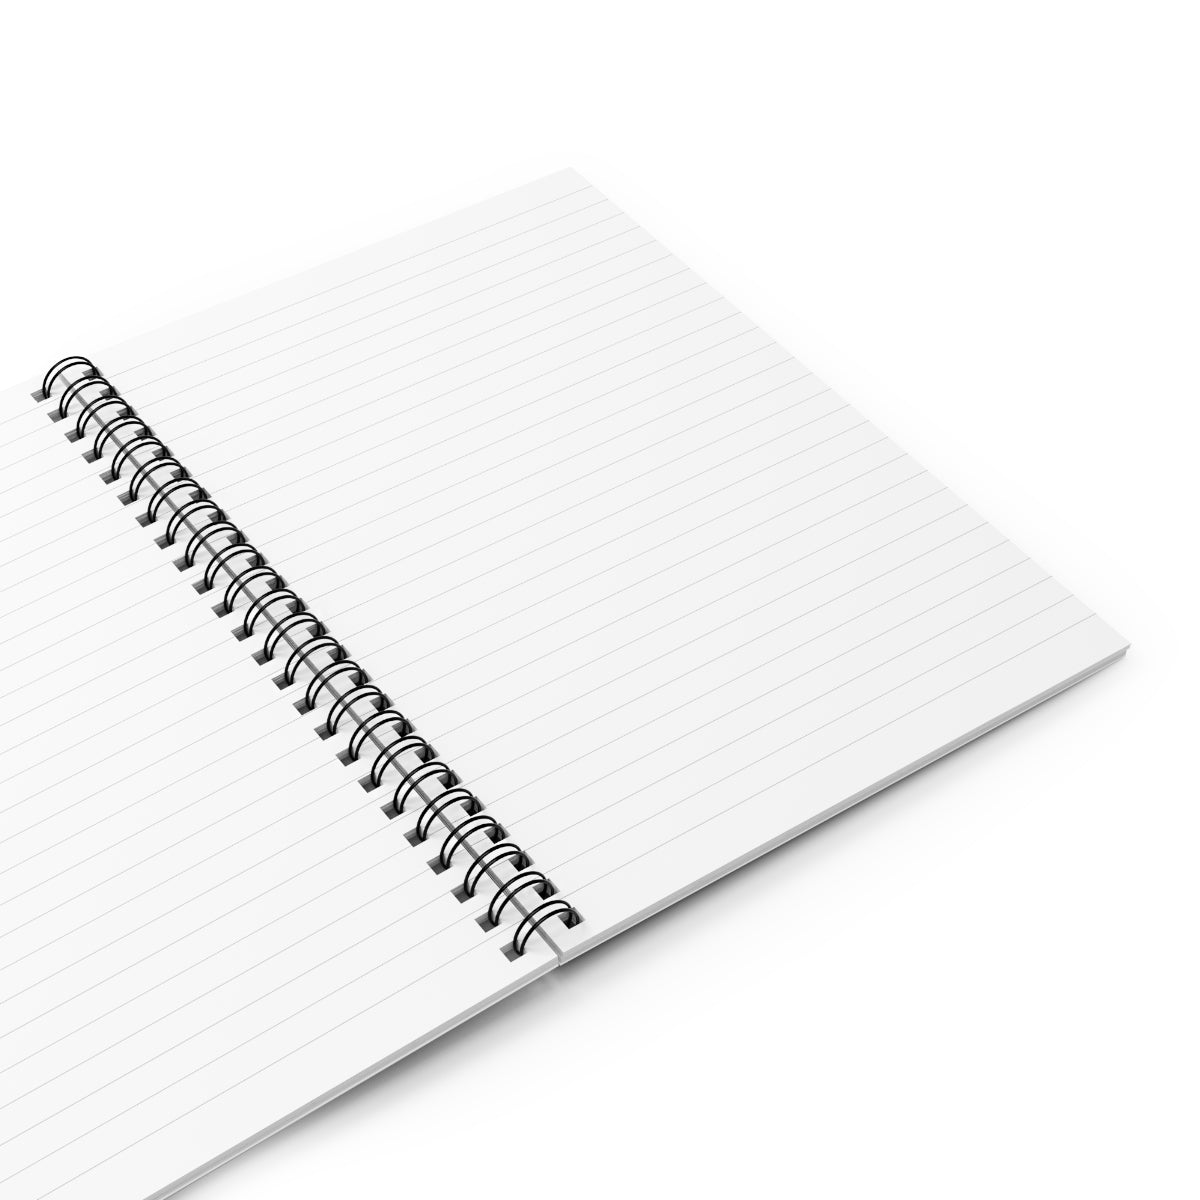 Teal Spiral Notebook - Ruled Line